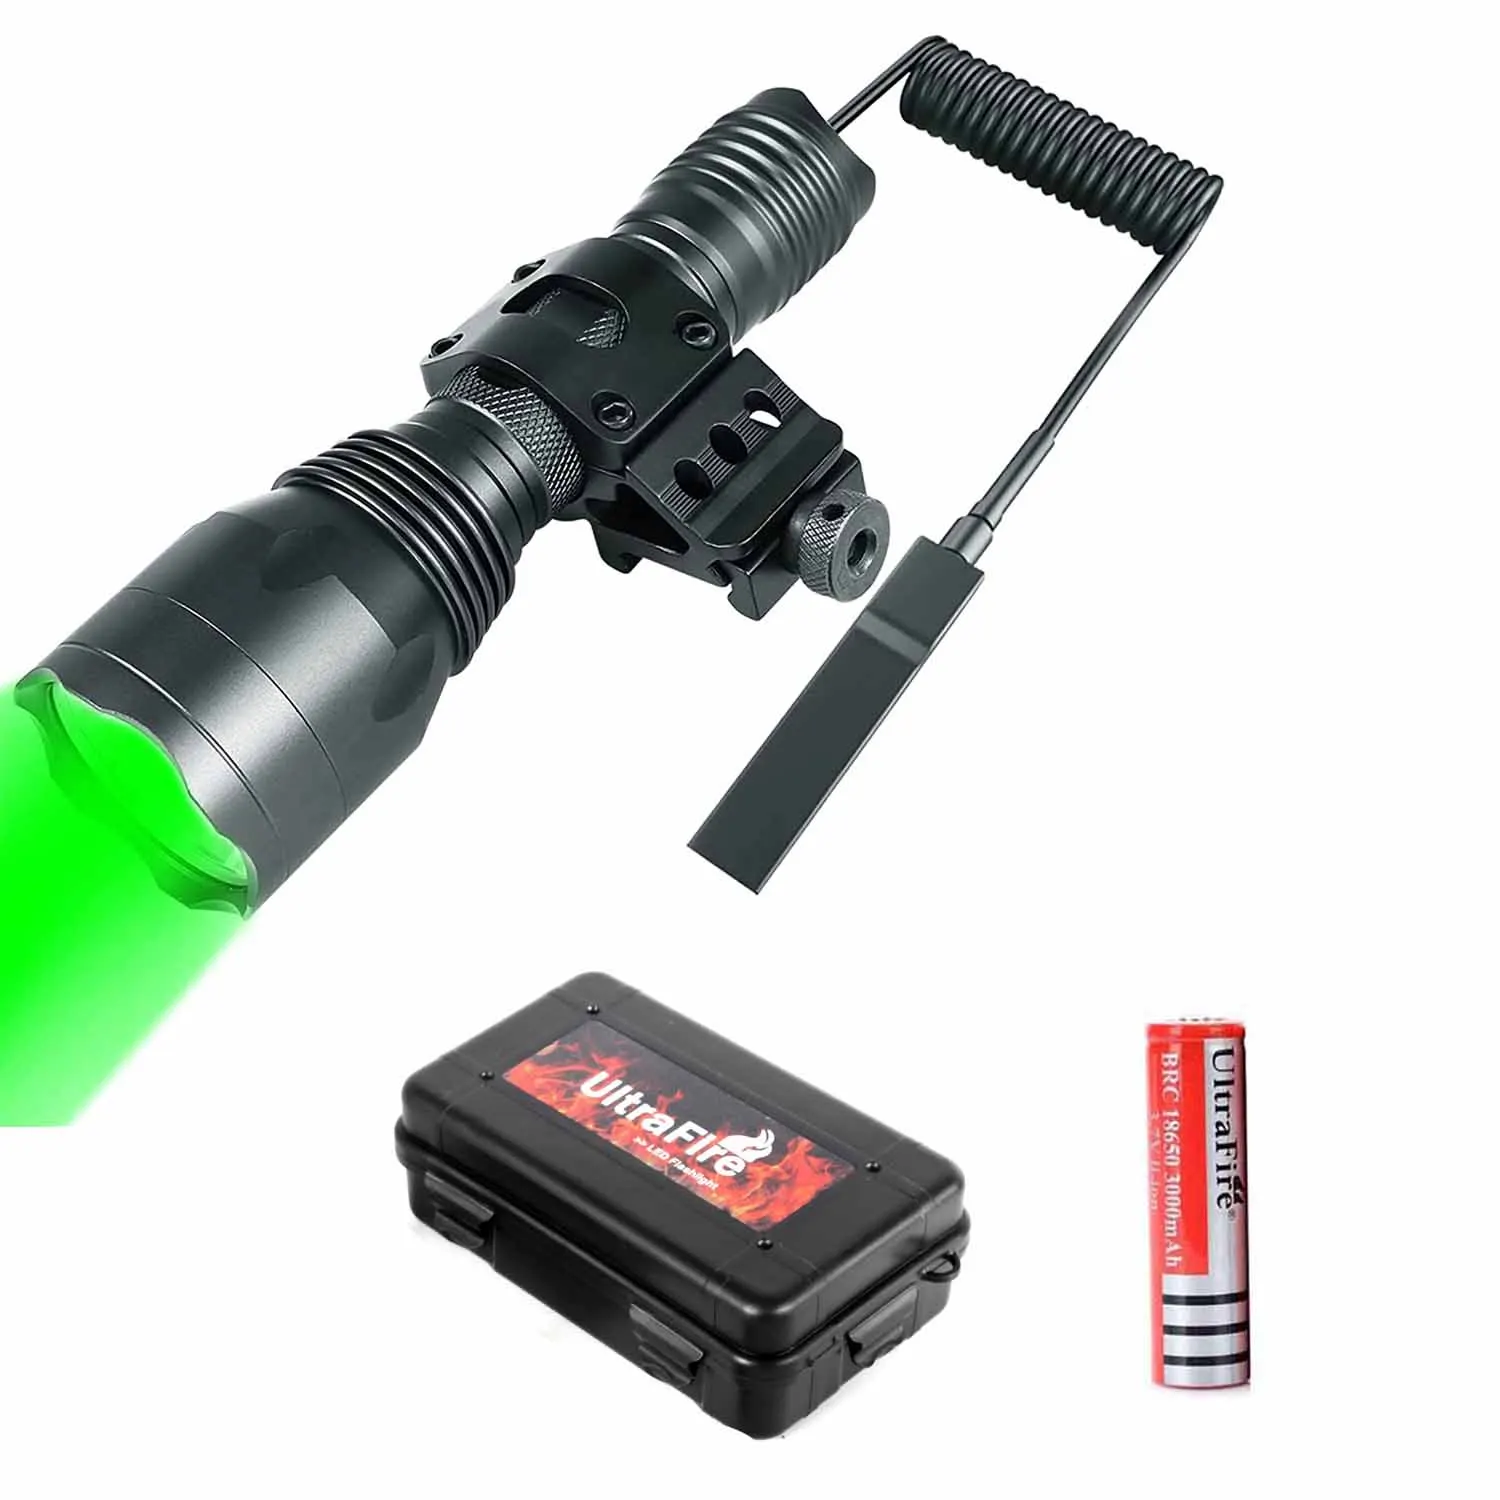 https://ae01.alicdn.com/kf/S84f305fc6d9540f3a9fb45359c9f603d0/UltraFire-H-G3-Waterproof-Military-Hunting-Portable-High-Power-LED-Flashlight-Tactical-Camping-Long-Range-Wide.jpg